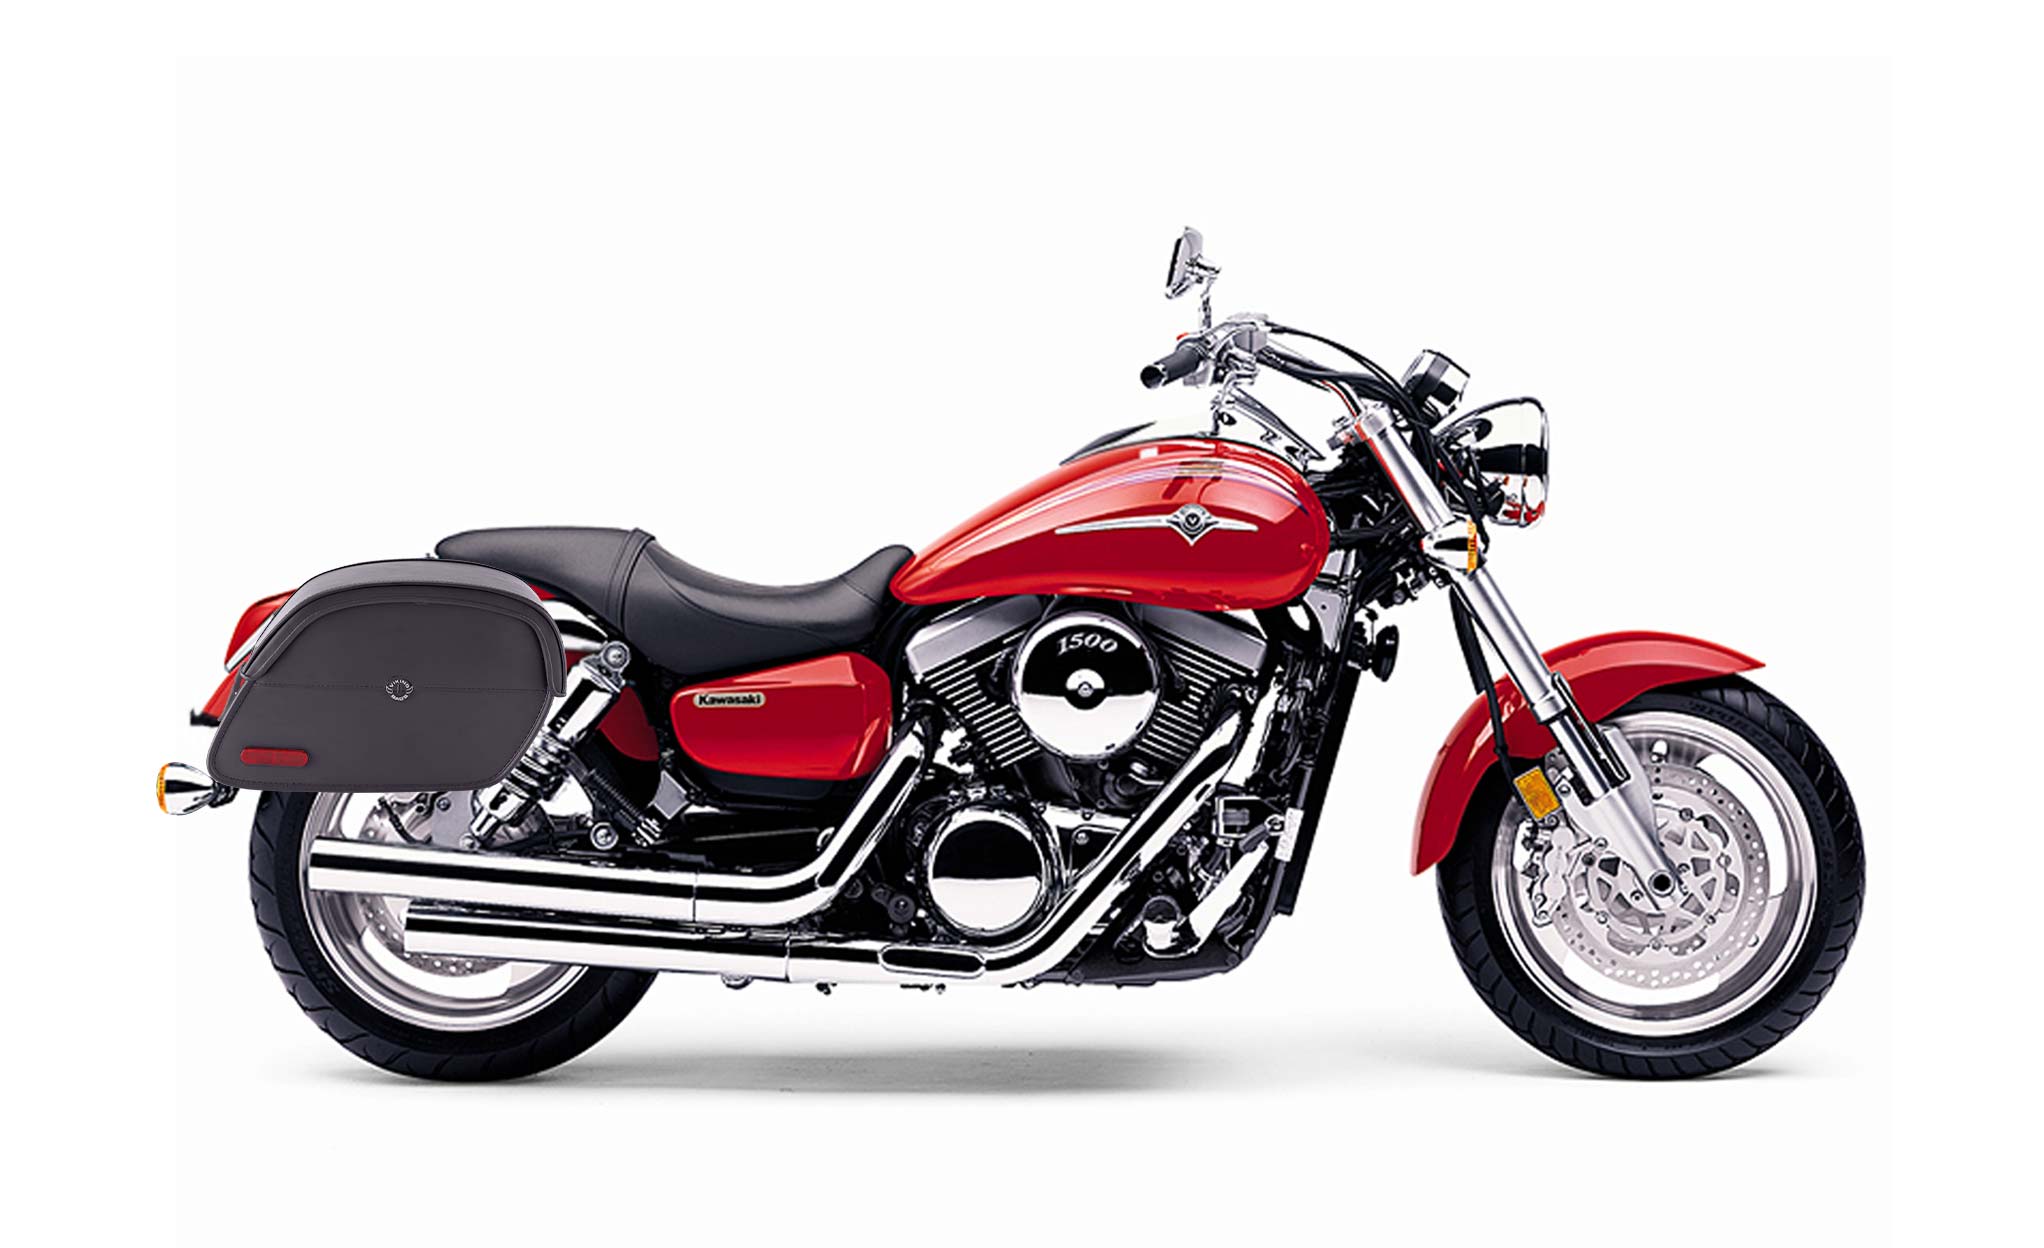 Viking California Large Kawasaki Mean Streak 1500 Leather Motorcycle Saddlebags on Bike Photo @expand